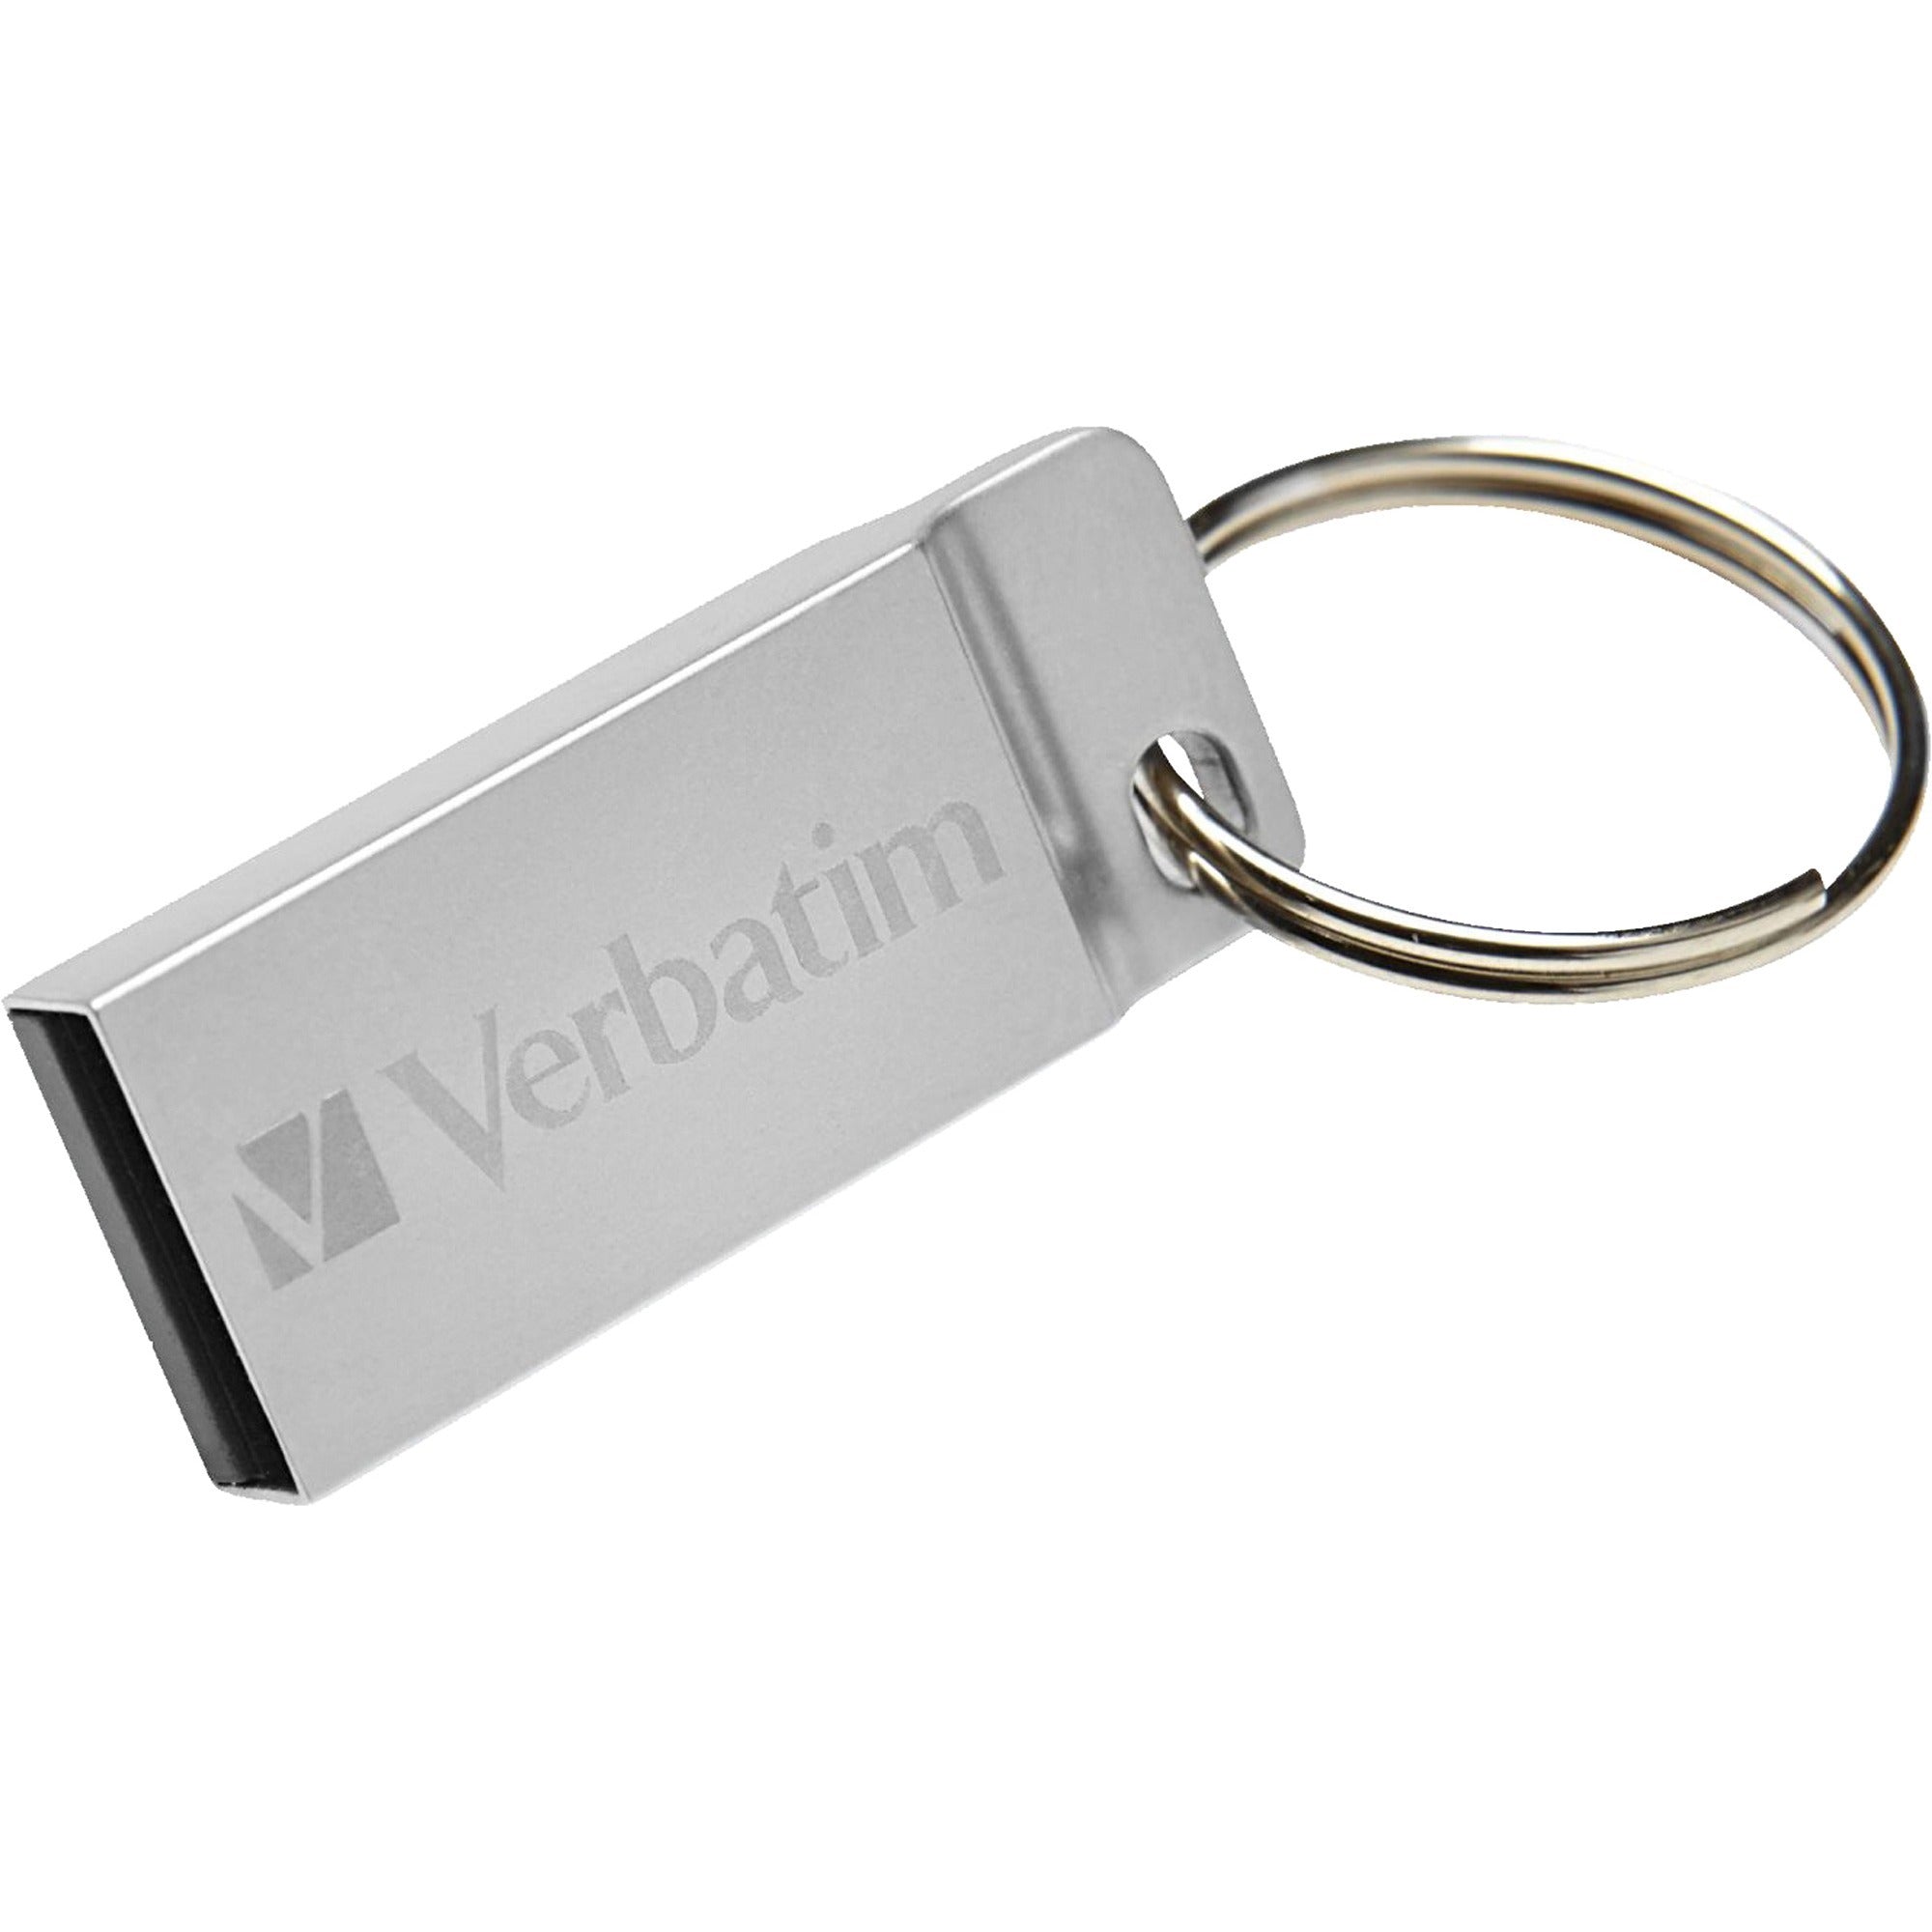 verbatim-16gb-metal-executive-usb-flash-drive-silver-16-gbusb-20-silver_ver98748 - 1